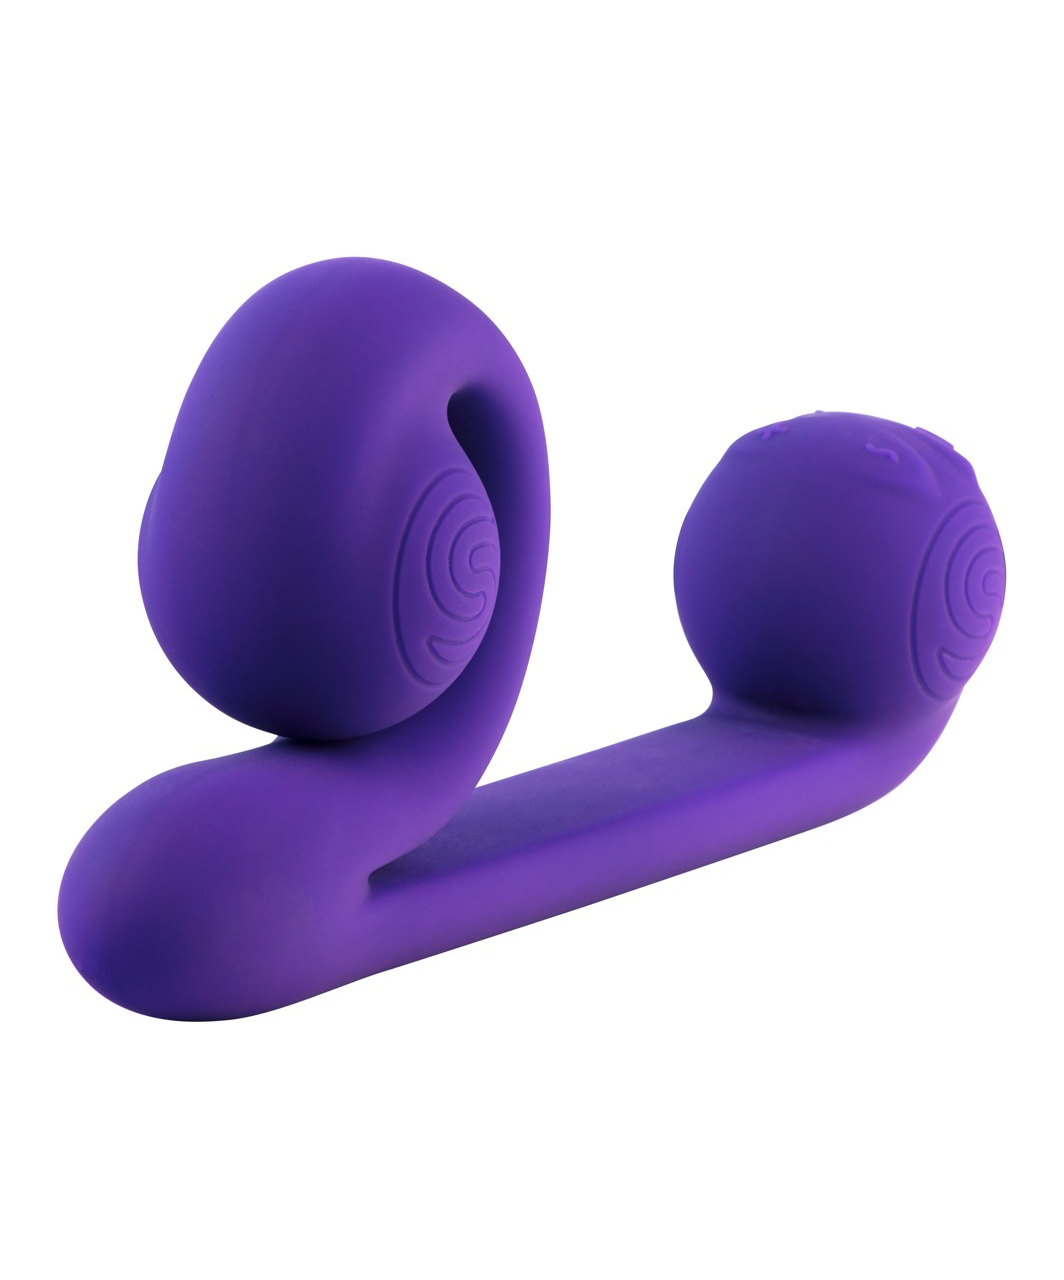 Snail Vibe Slide'n'Roll Dual Tech Vibrator